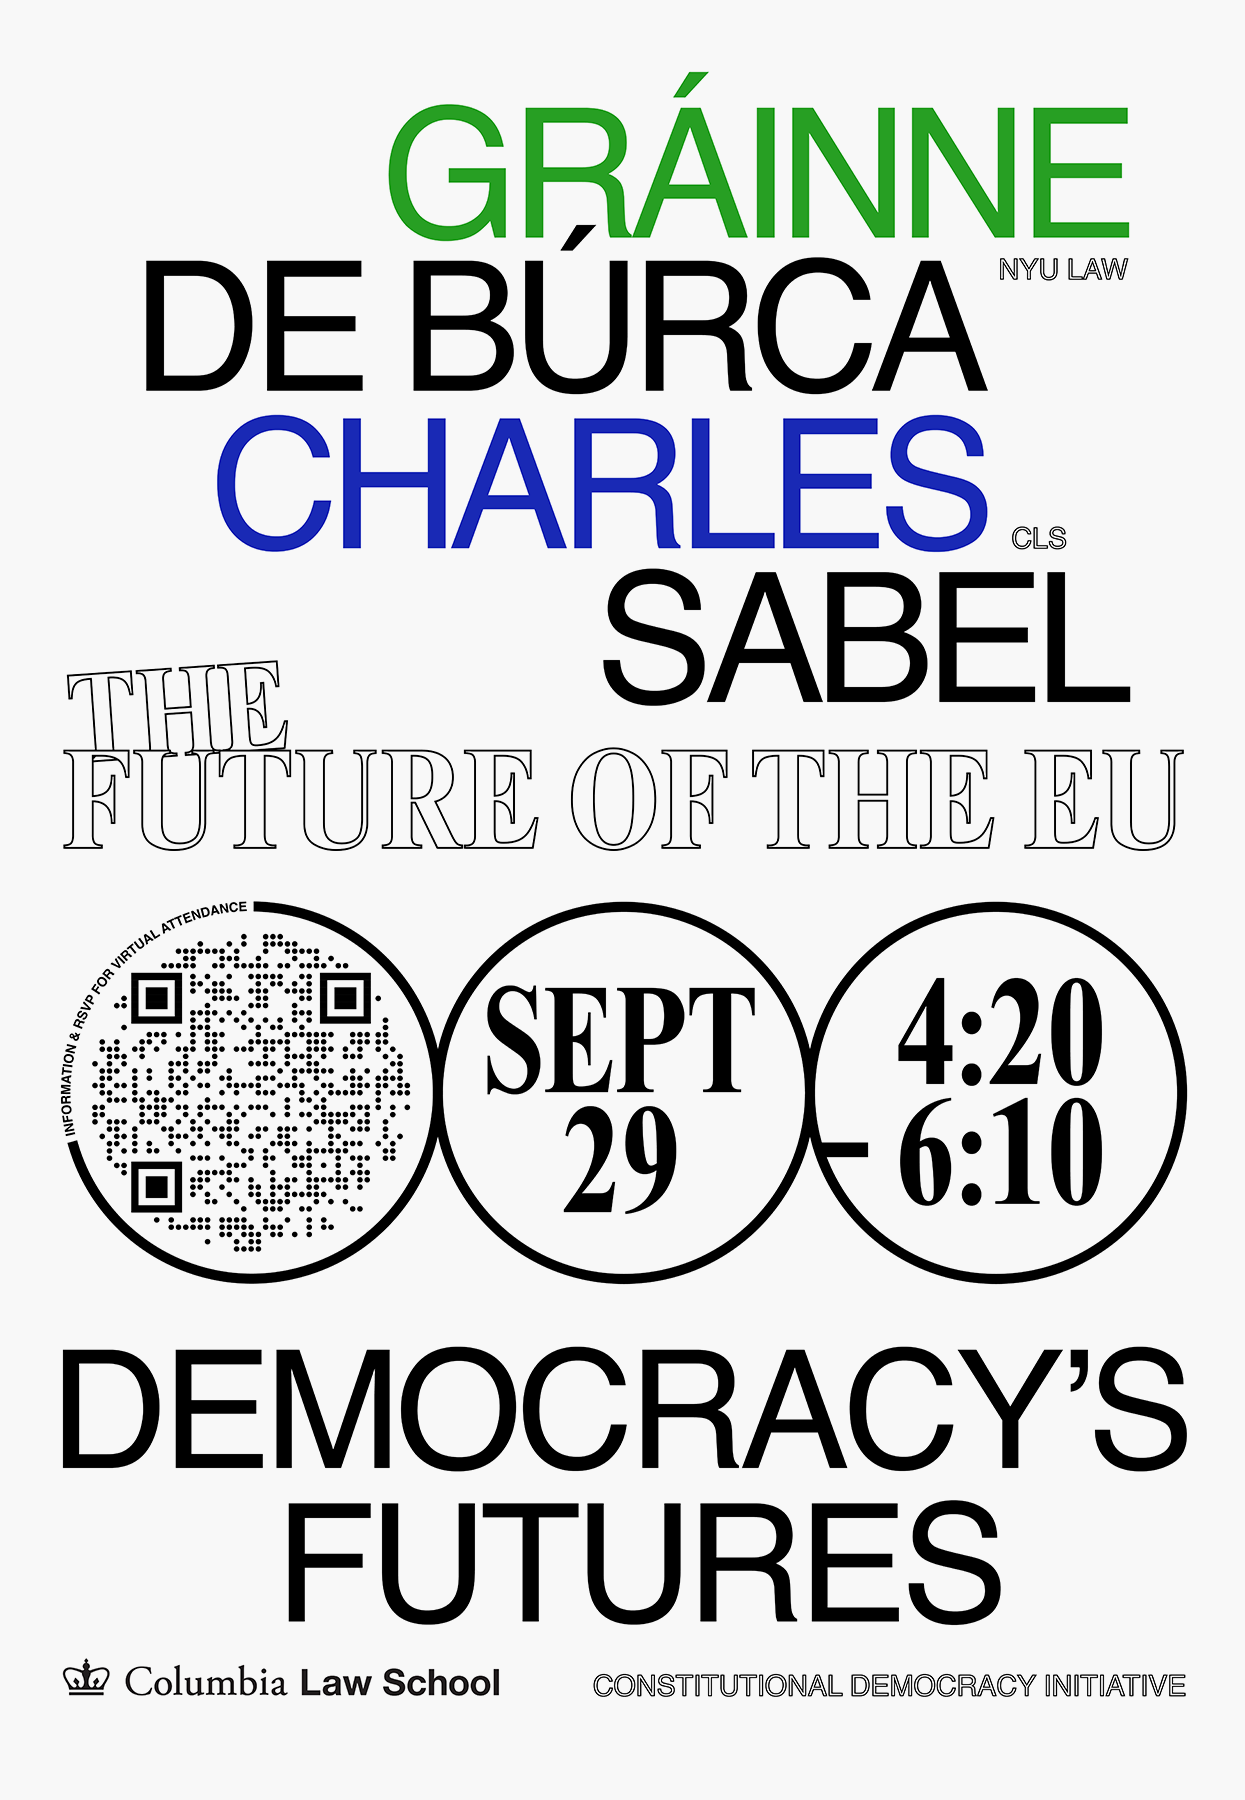 Democracy's Futures - "The Future of the EU"